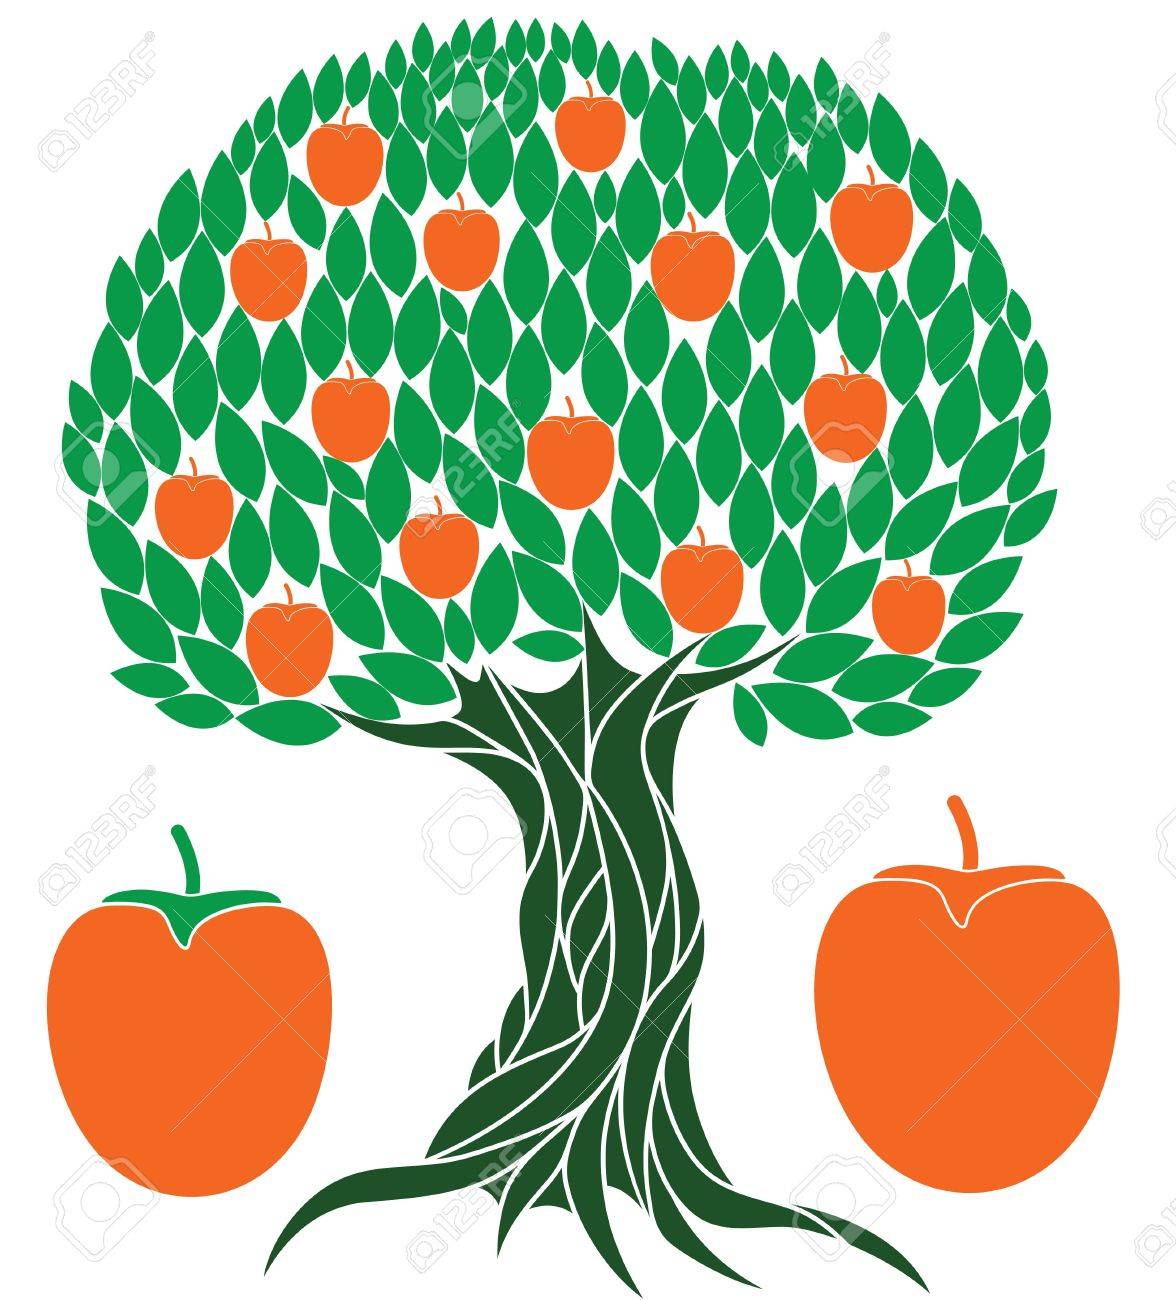 Persimmon tree illustration Stock Vector - 33203054